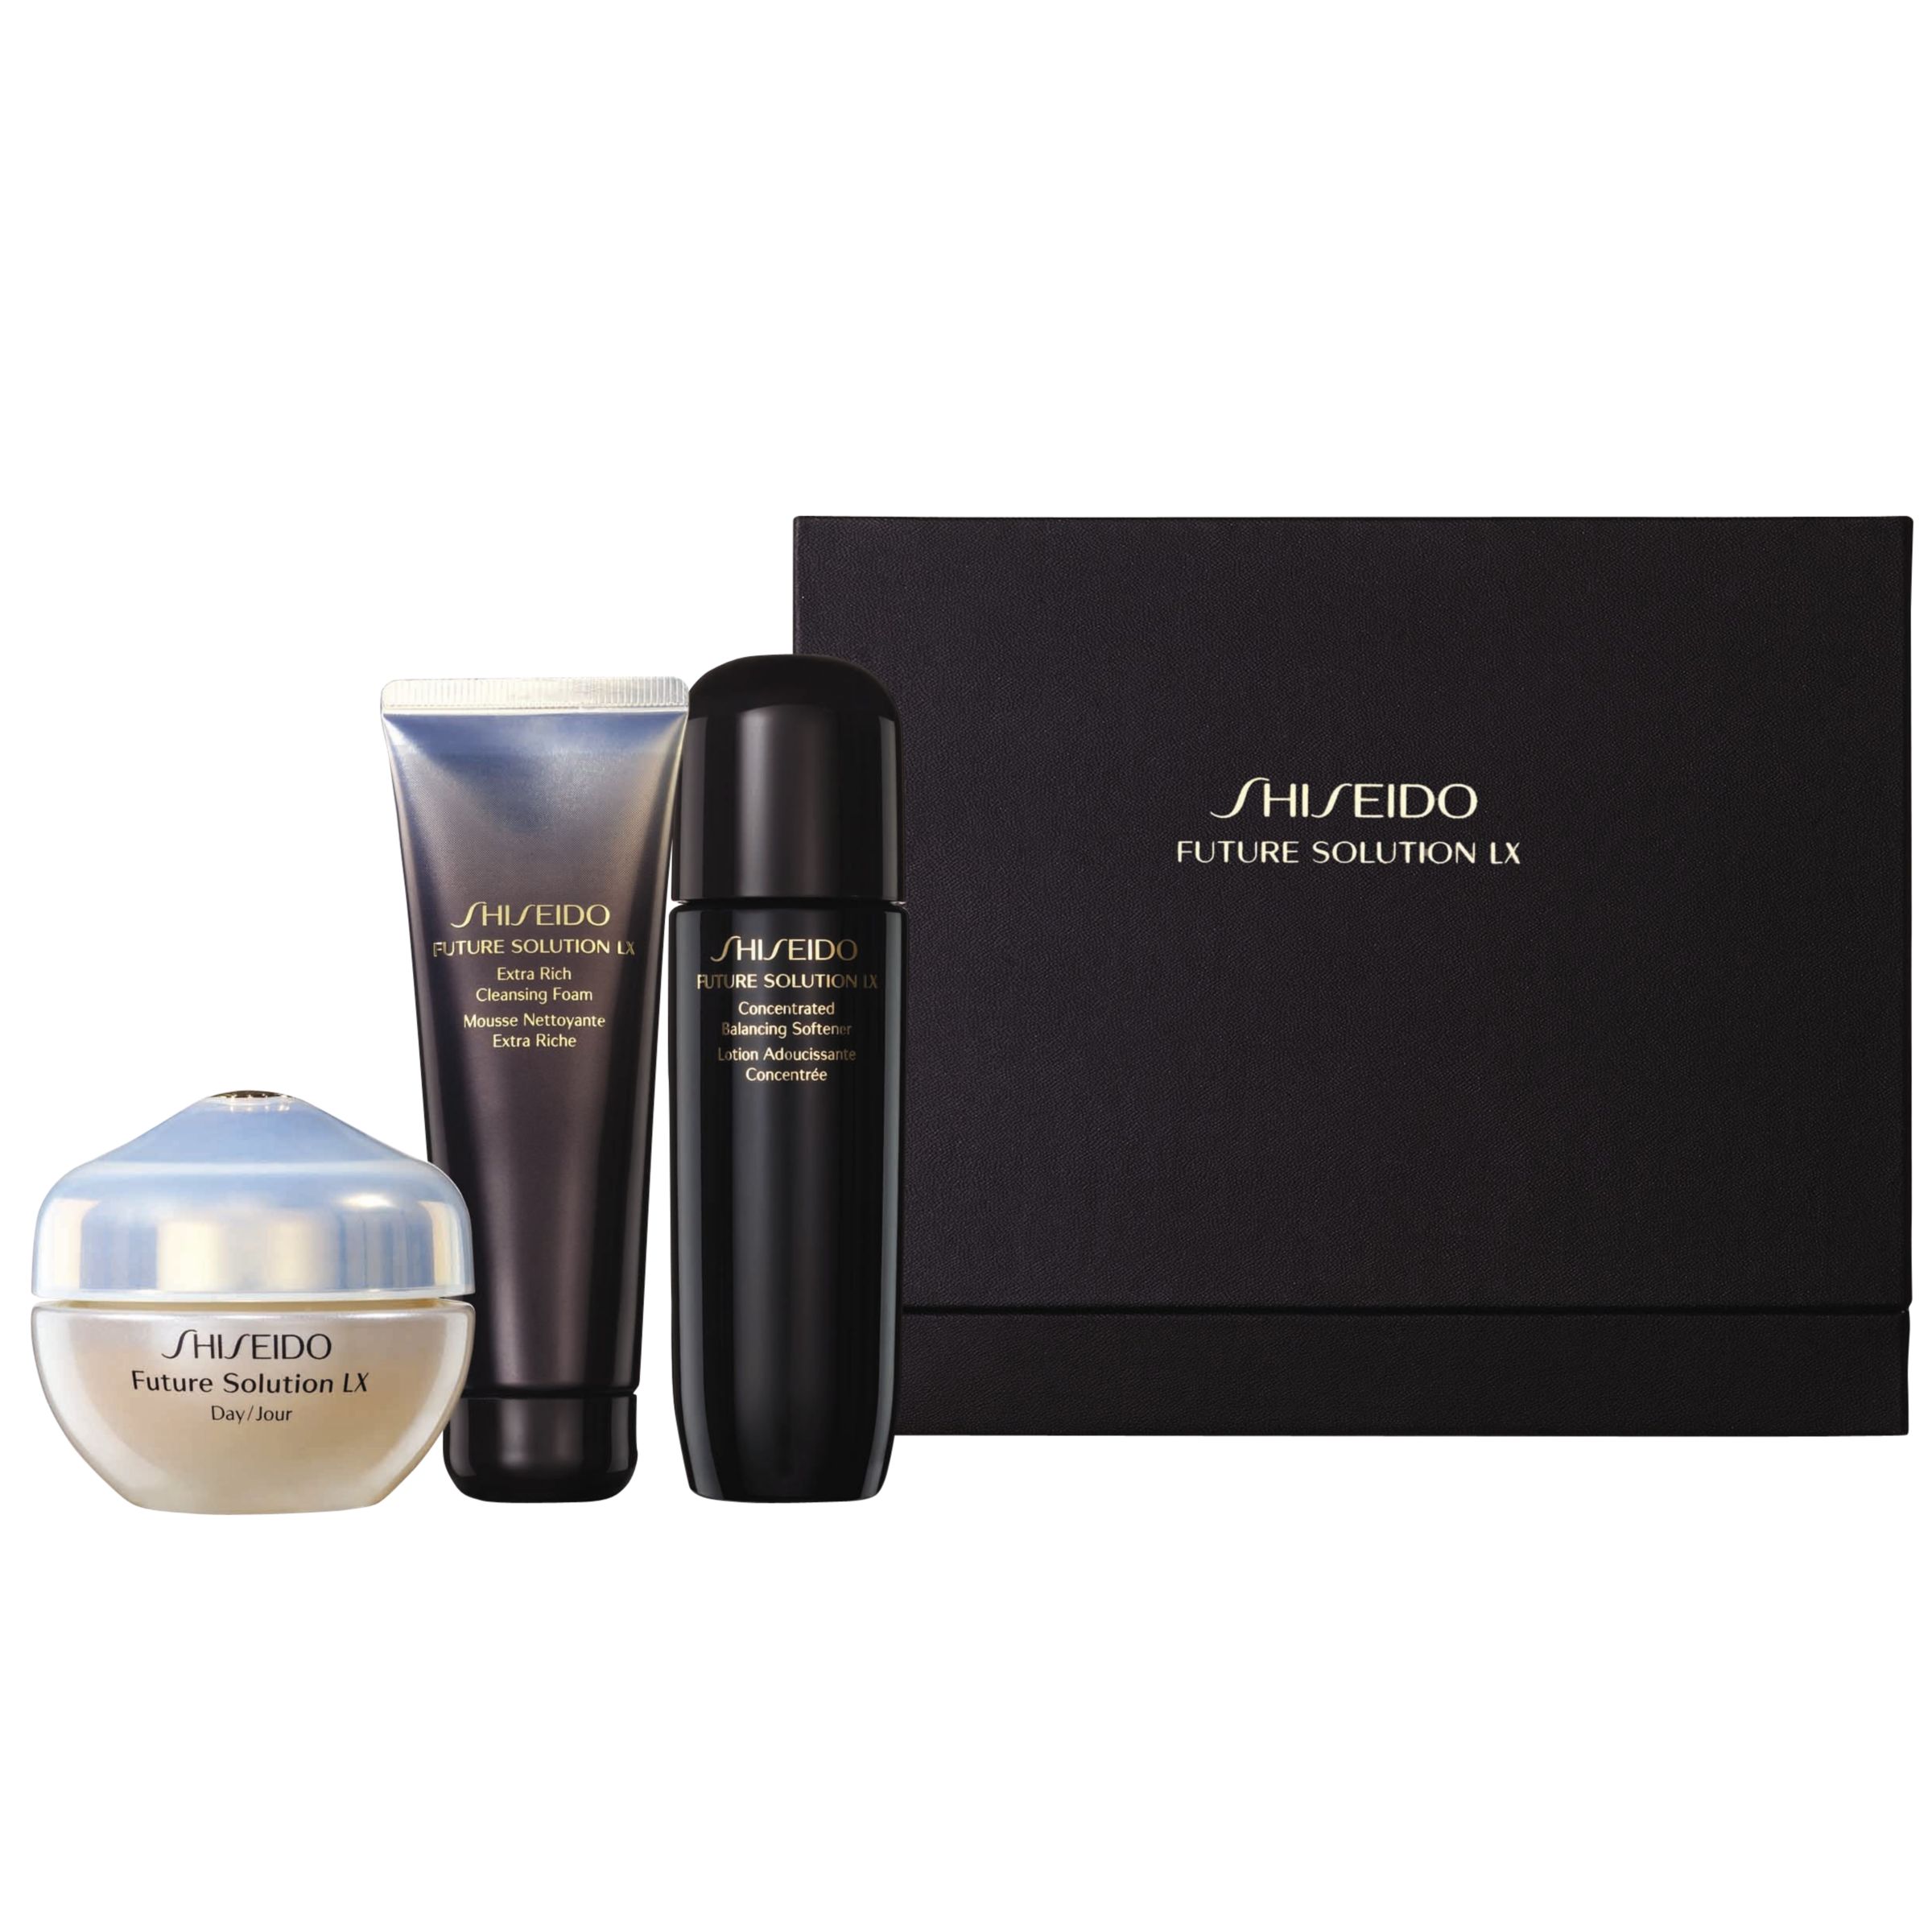 Shiseido Future Solution LX Daytime Collection Gift Set at John Lewis